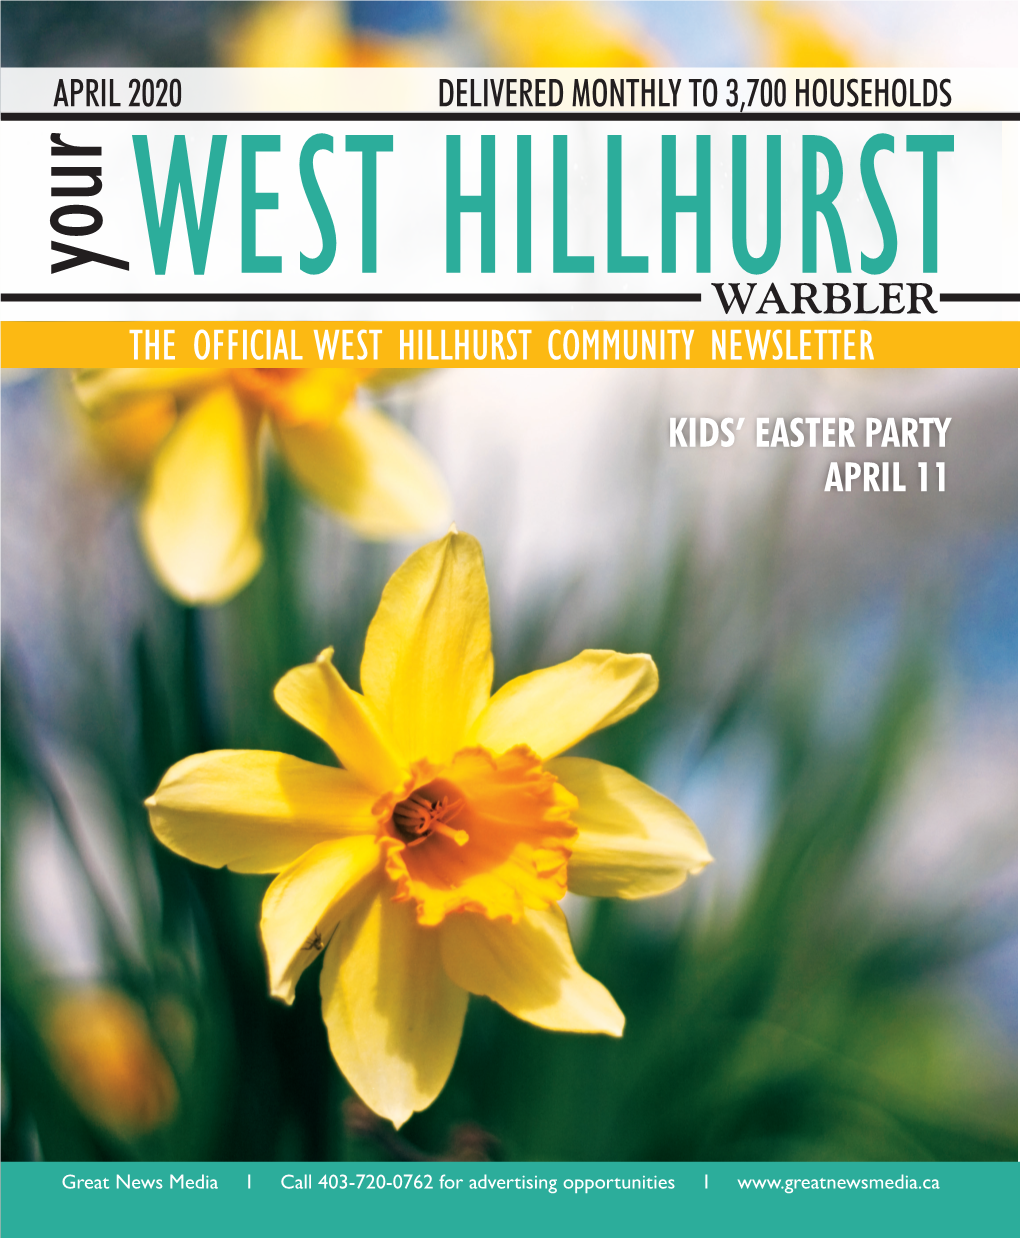 The Official West Hillhurst Community Newsletter